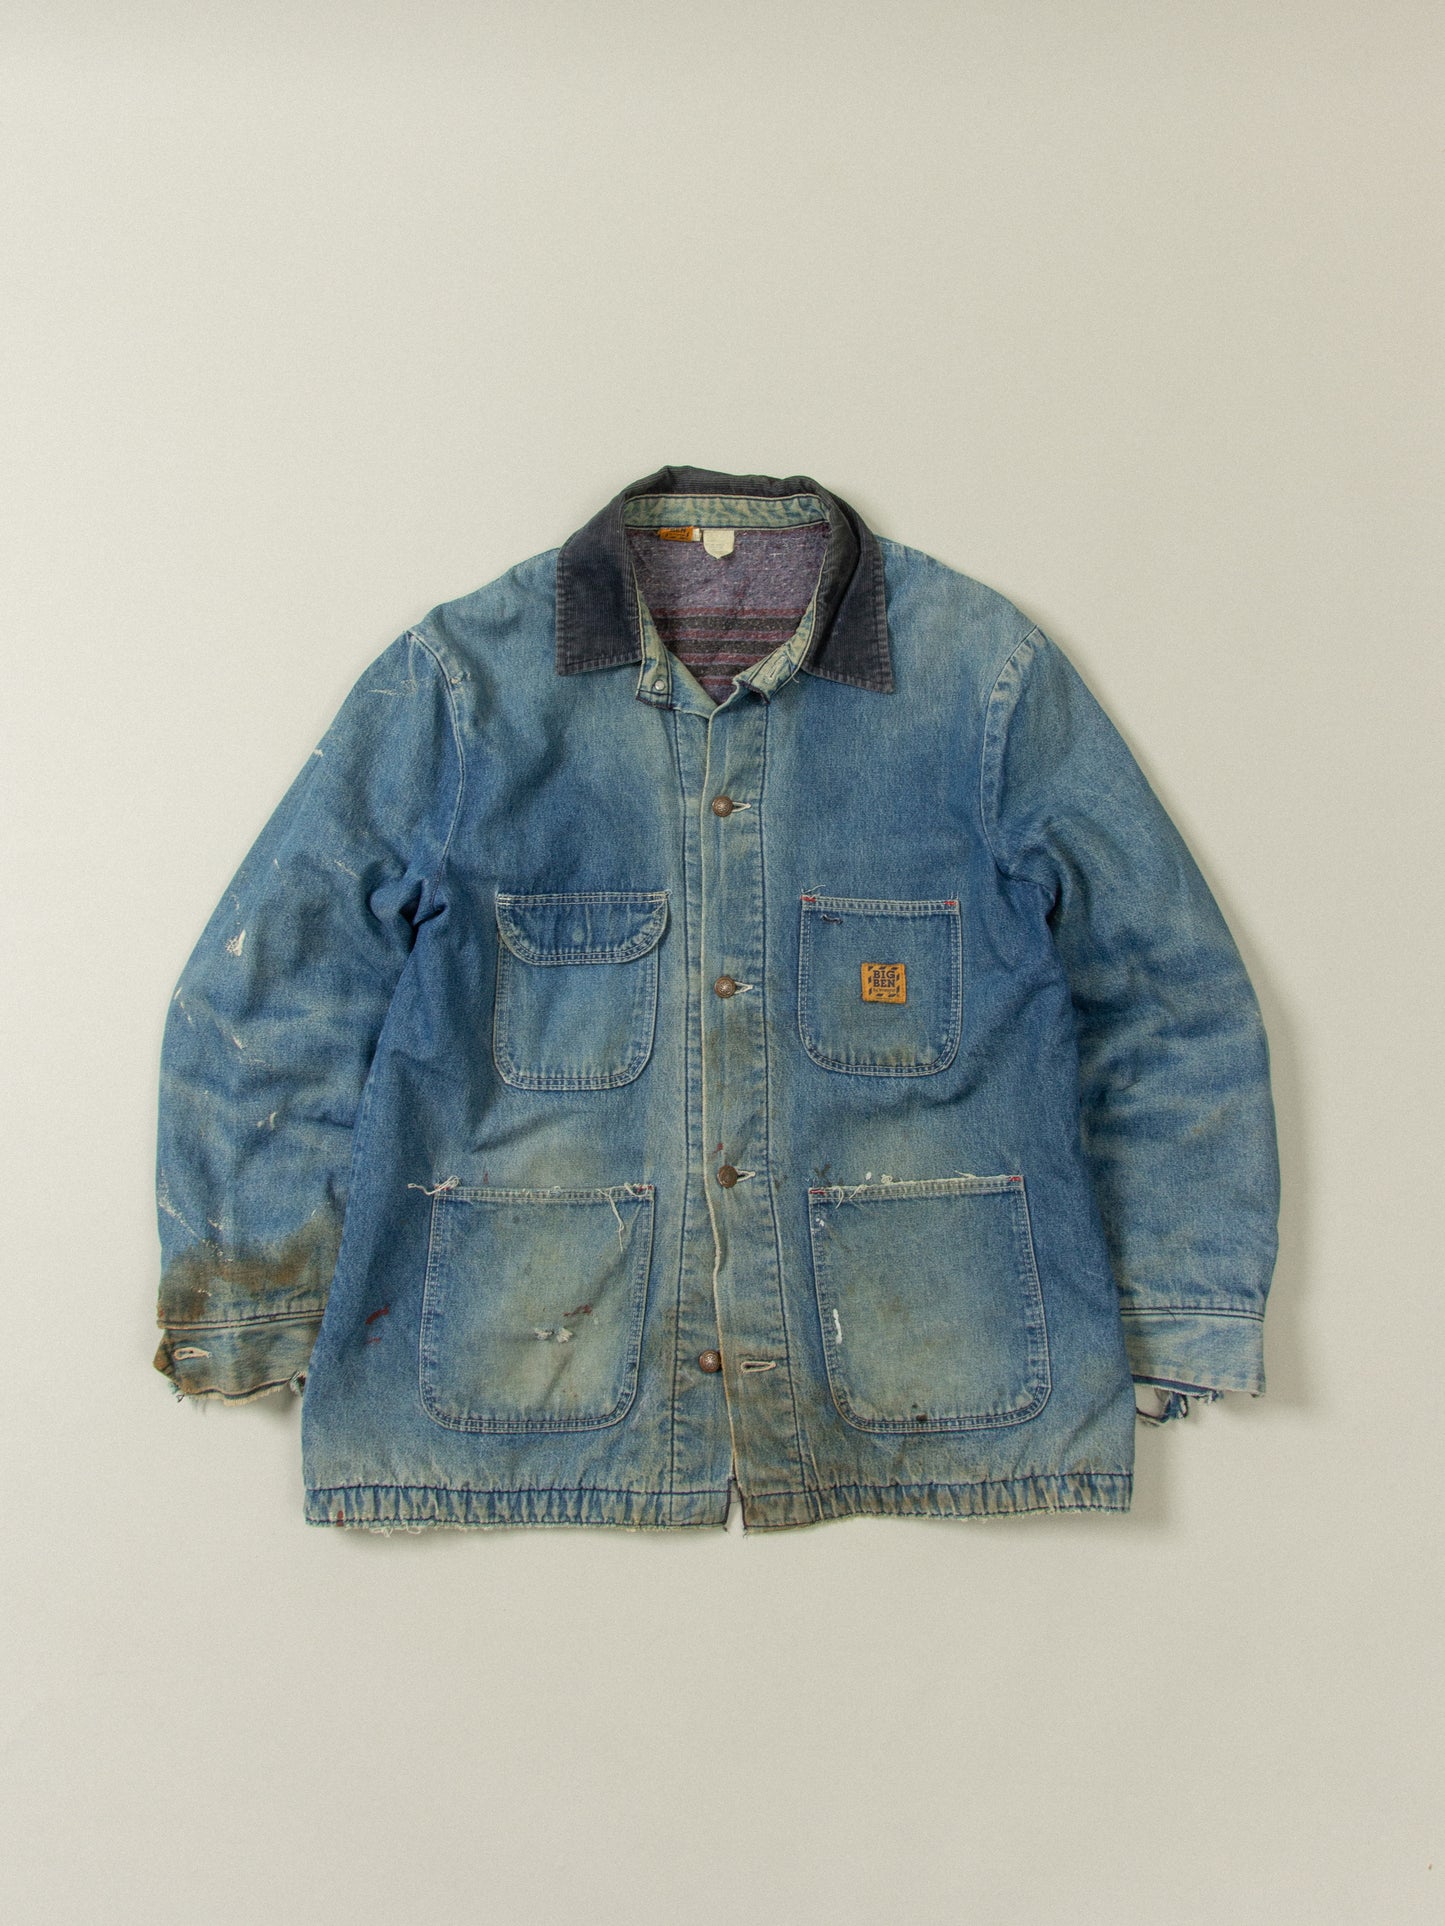 Vtg 1980s Big Ben Loco Jacket - Made in USA (L)